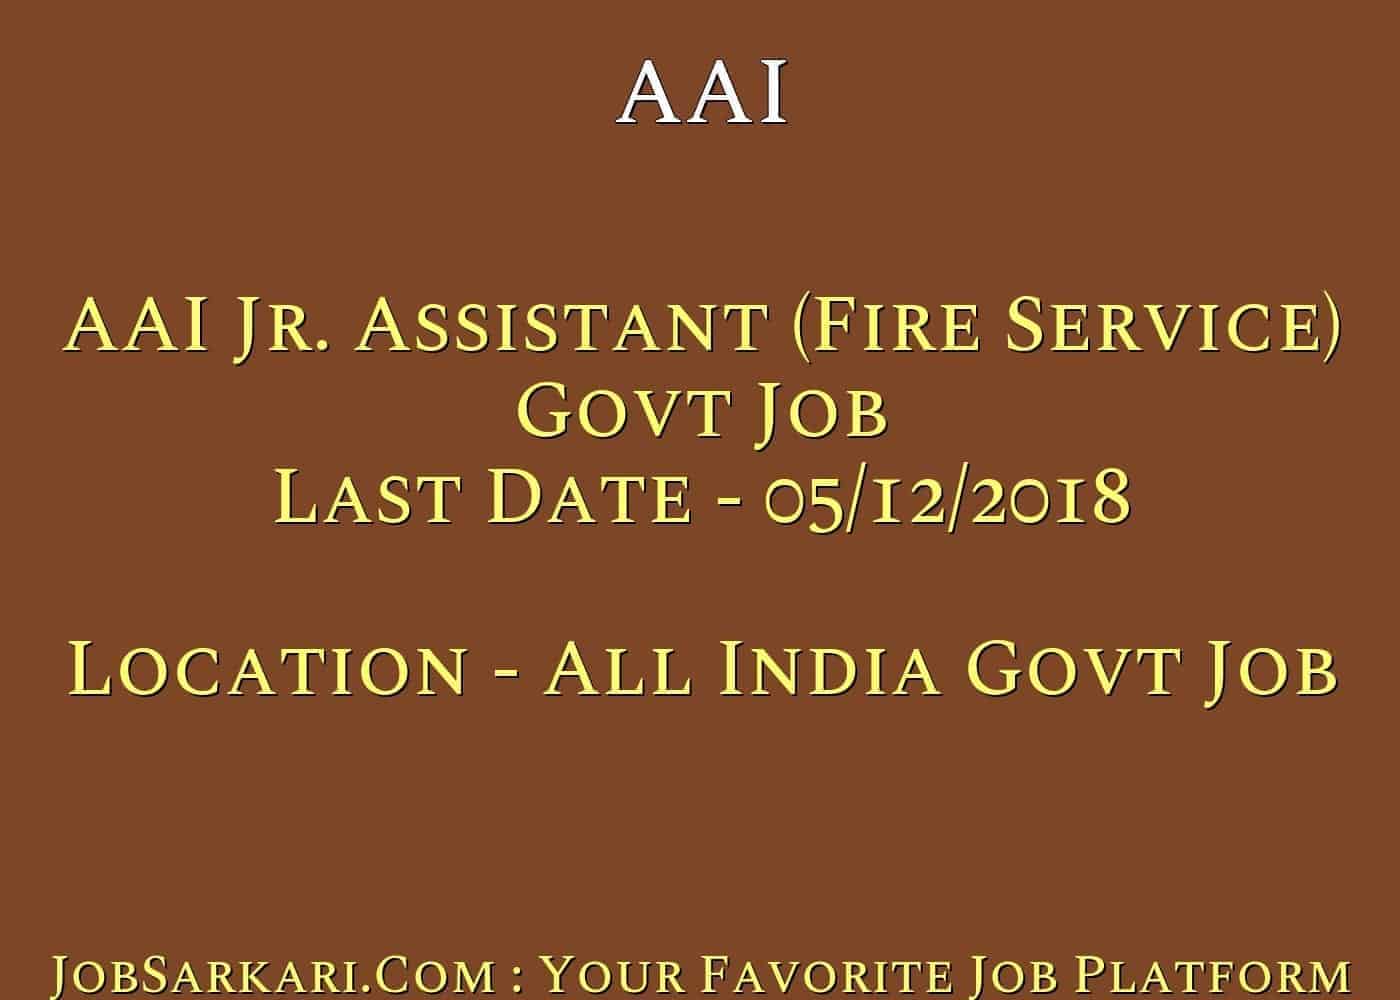 AAI Recruitment 2018 For Jr. Assistant (Fire Services) Govt Job